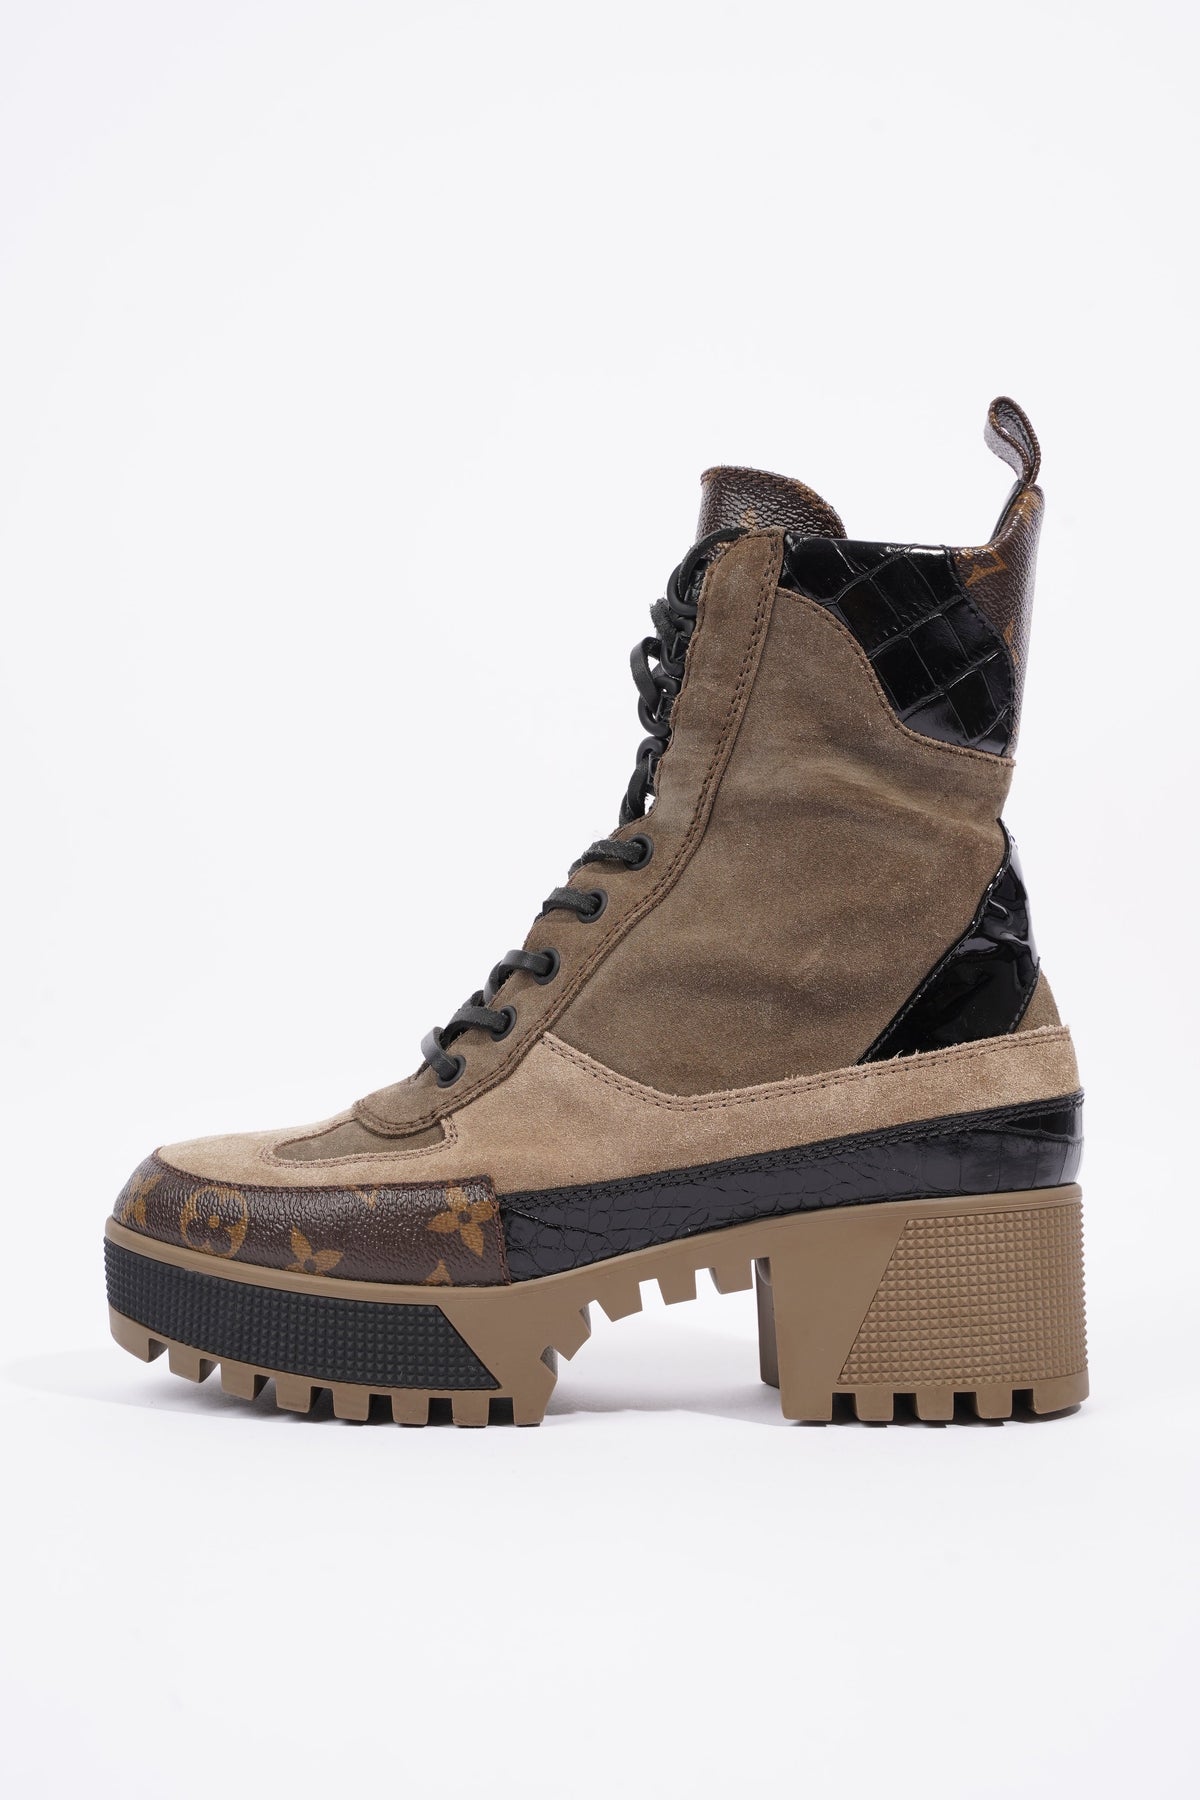 louis vuitton Desert boots 37 worn once, no marks, box/bags incl. 